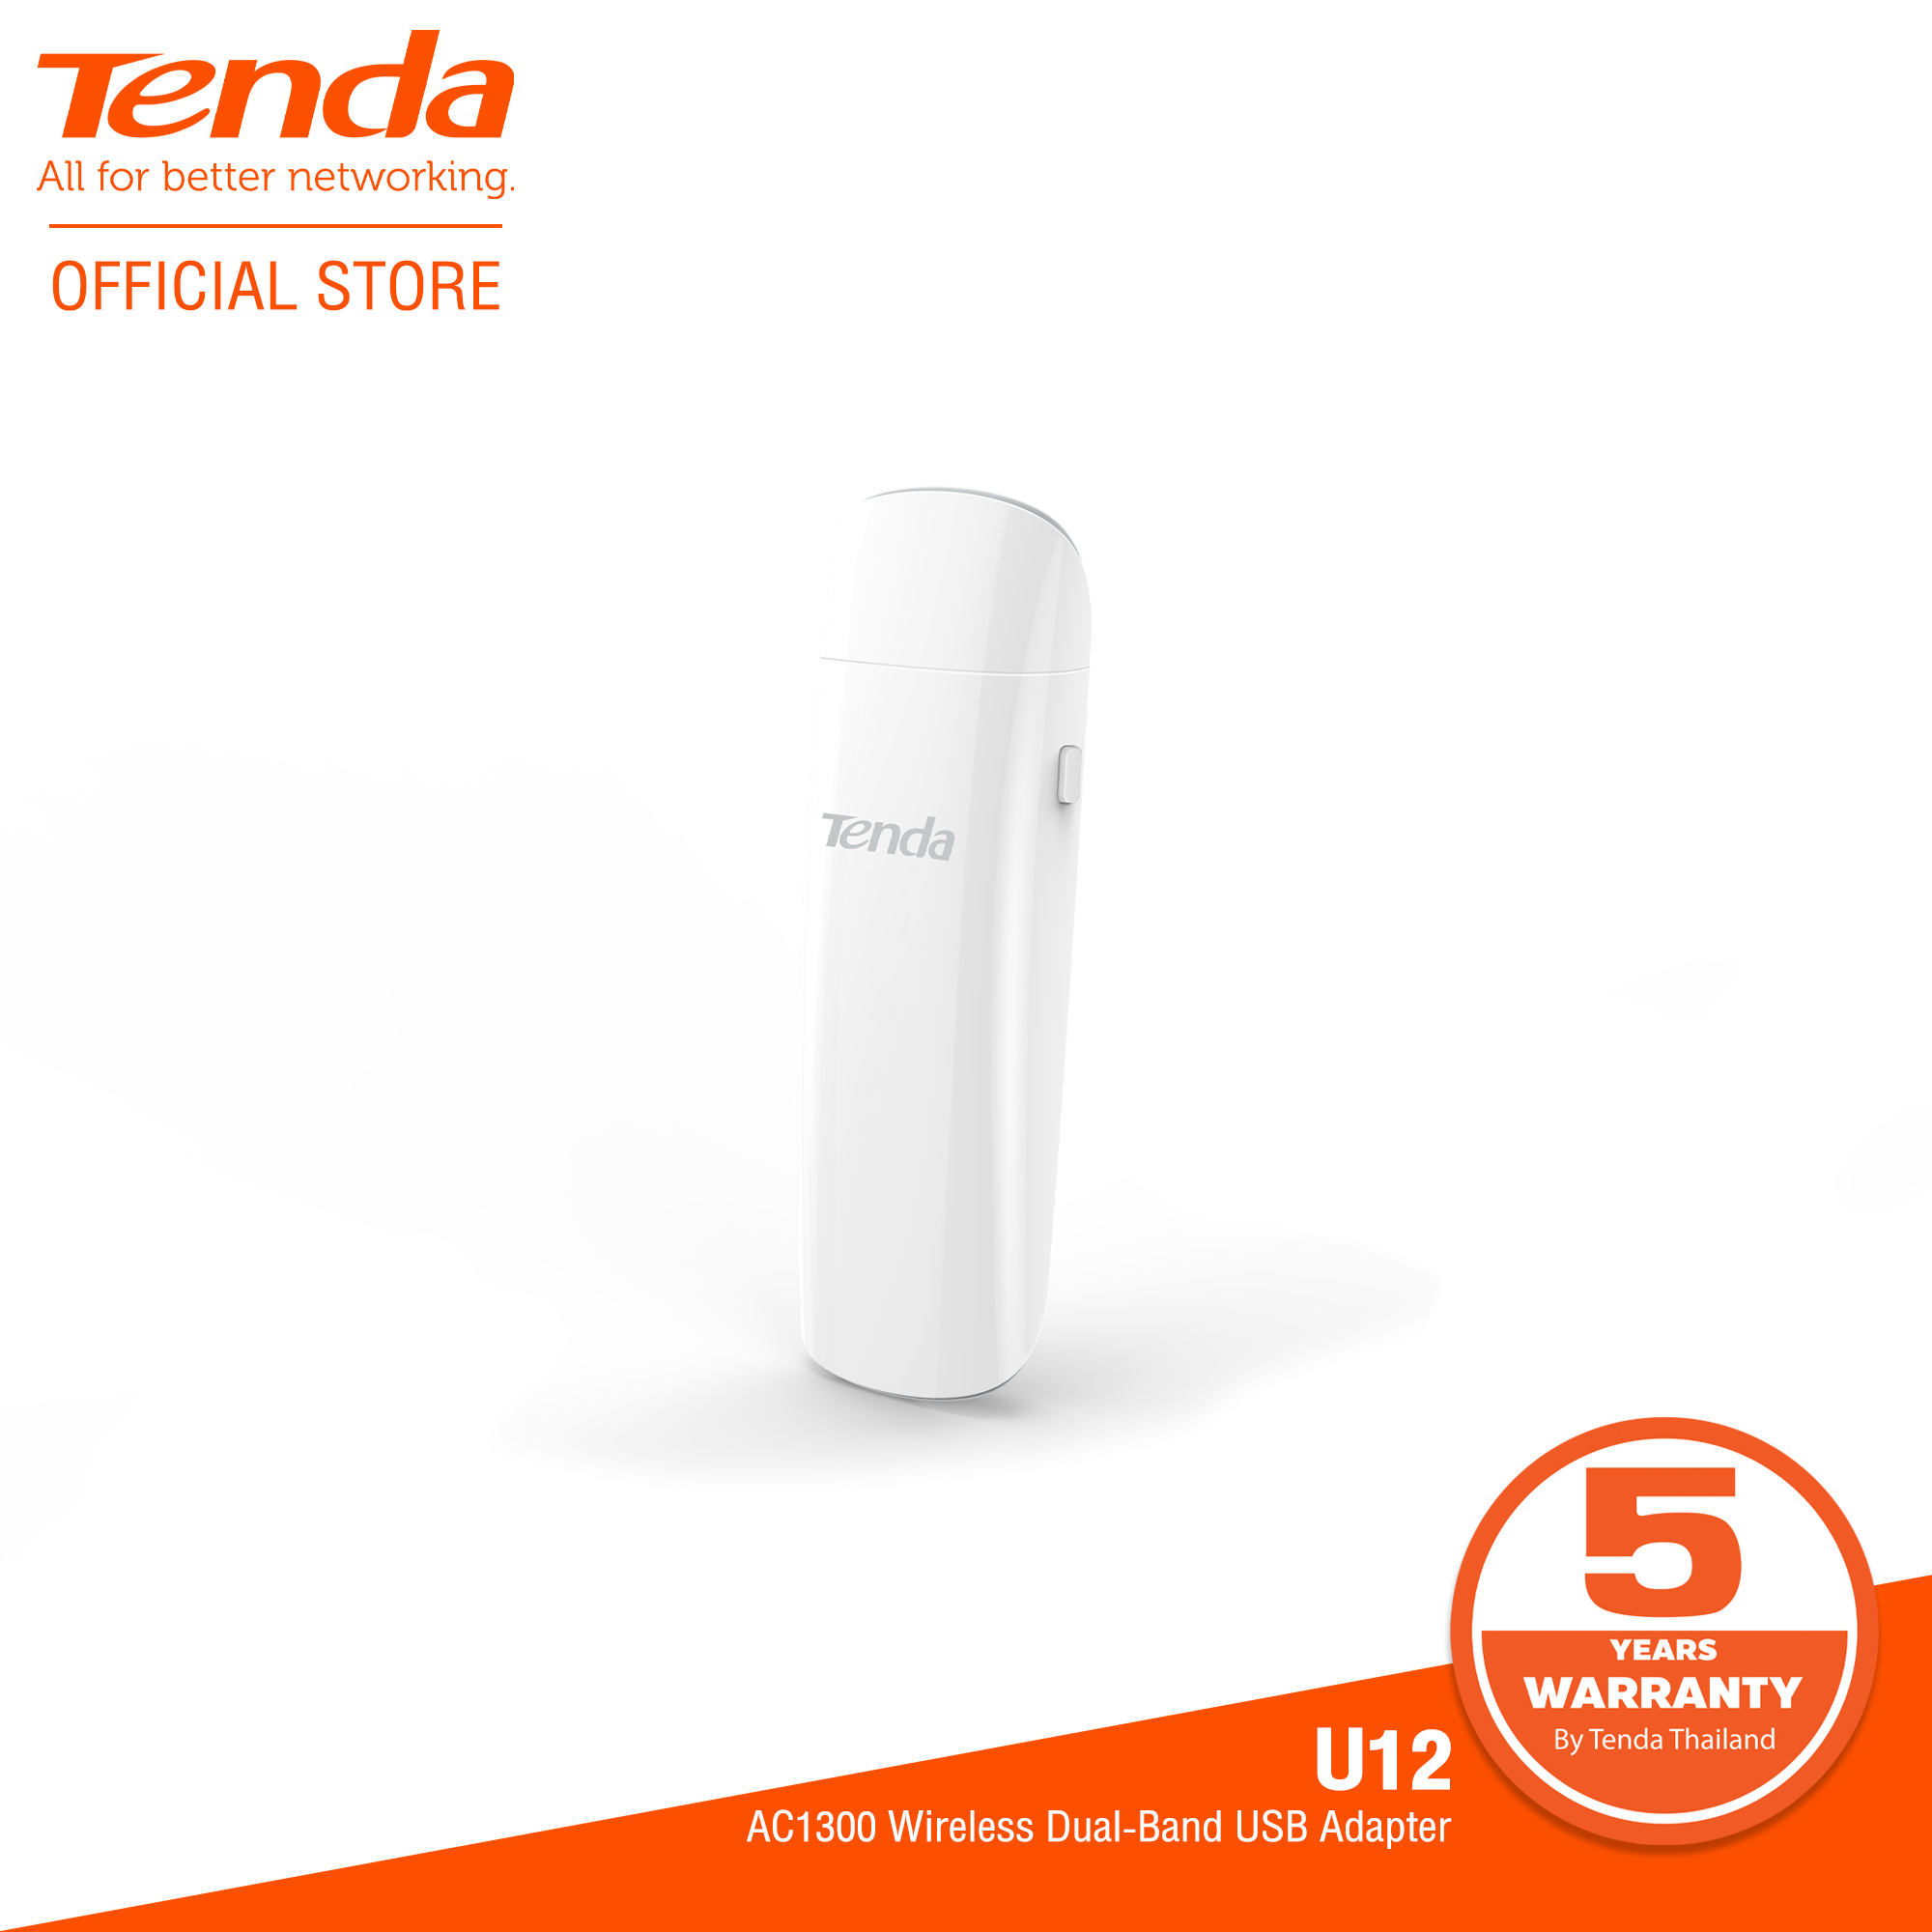 Tenda U12 WiFi Adapters ตัวรับสัญญาณ WiFi ไร้สาย AC1300 5Ghz + 2.4Ghz Ultra Speed Wireless Dual Band USB 3.0 (ประกันศูนย์ไทย 5 ปี)